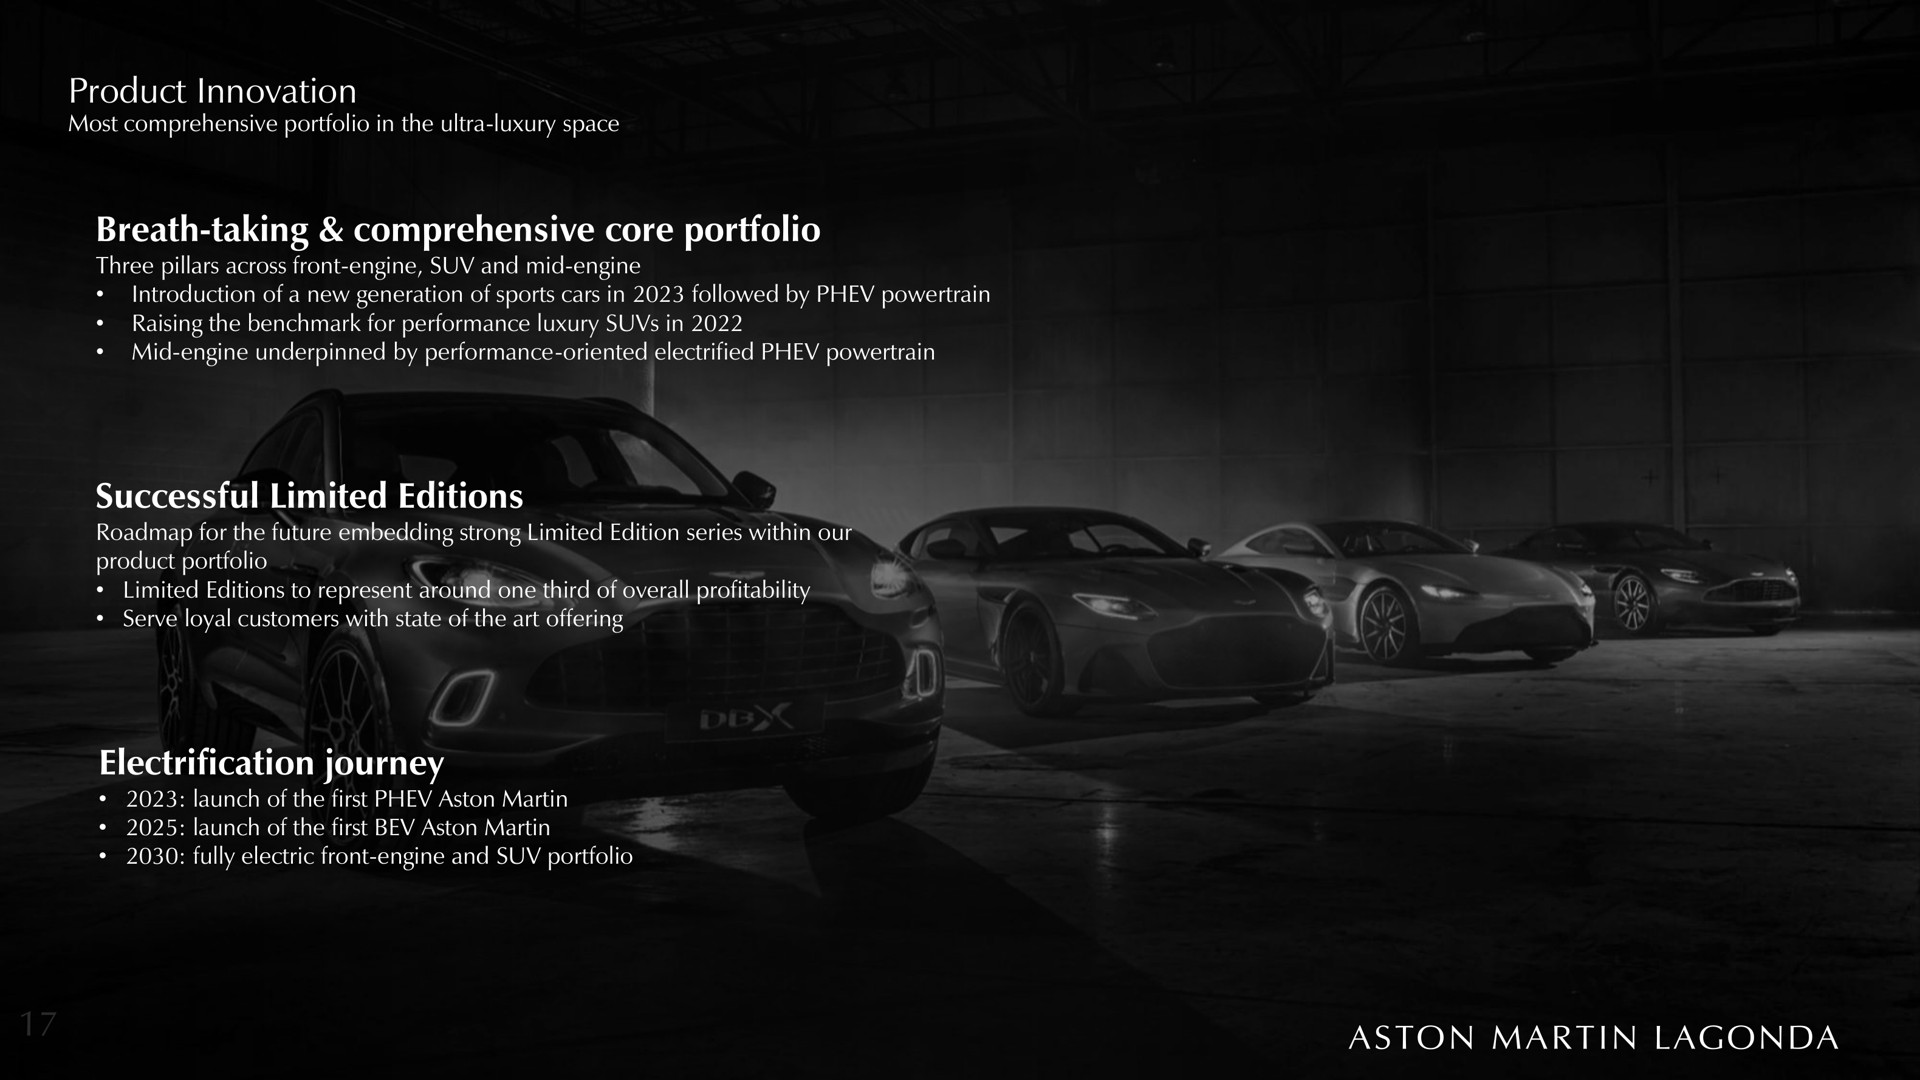 product innovation breath taking comprehensive core portfolio successful limited editions electrification journey eld to represent around one third of overall profitability martin | Aston Martin Lagonda